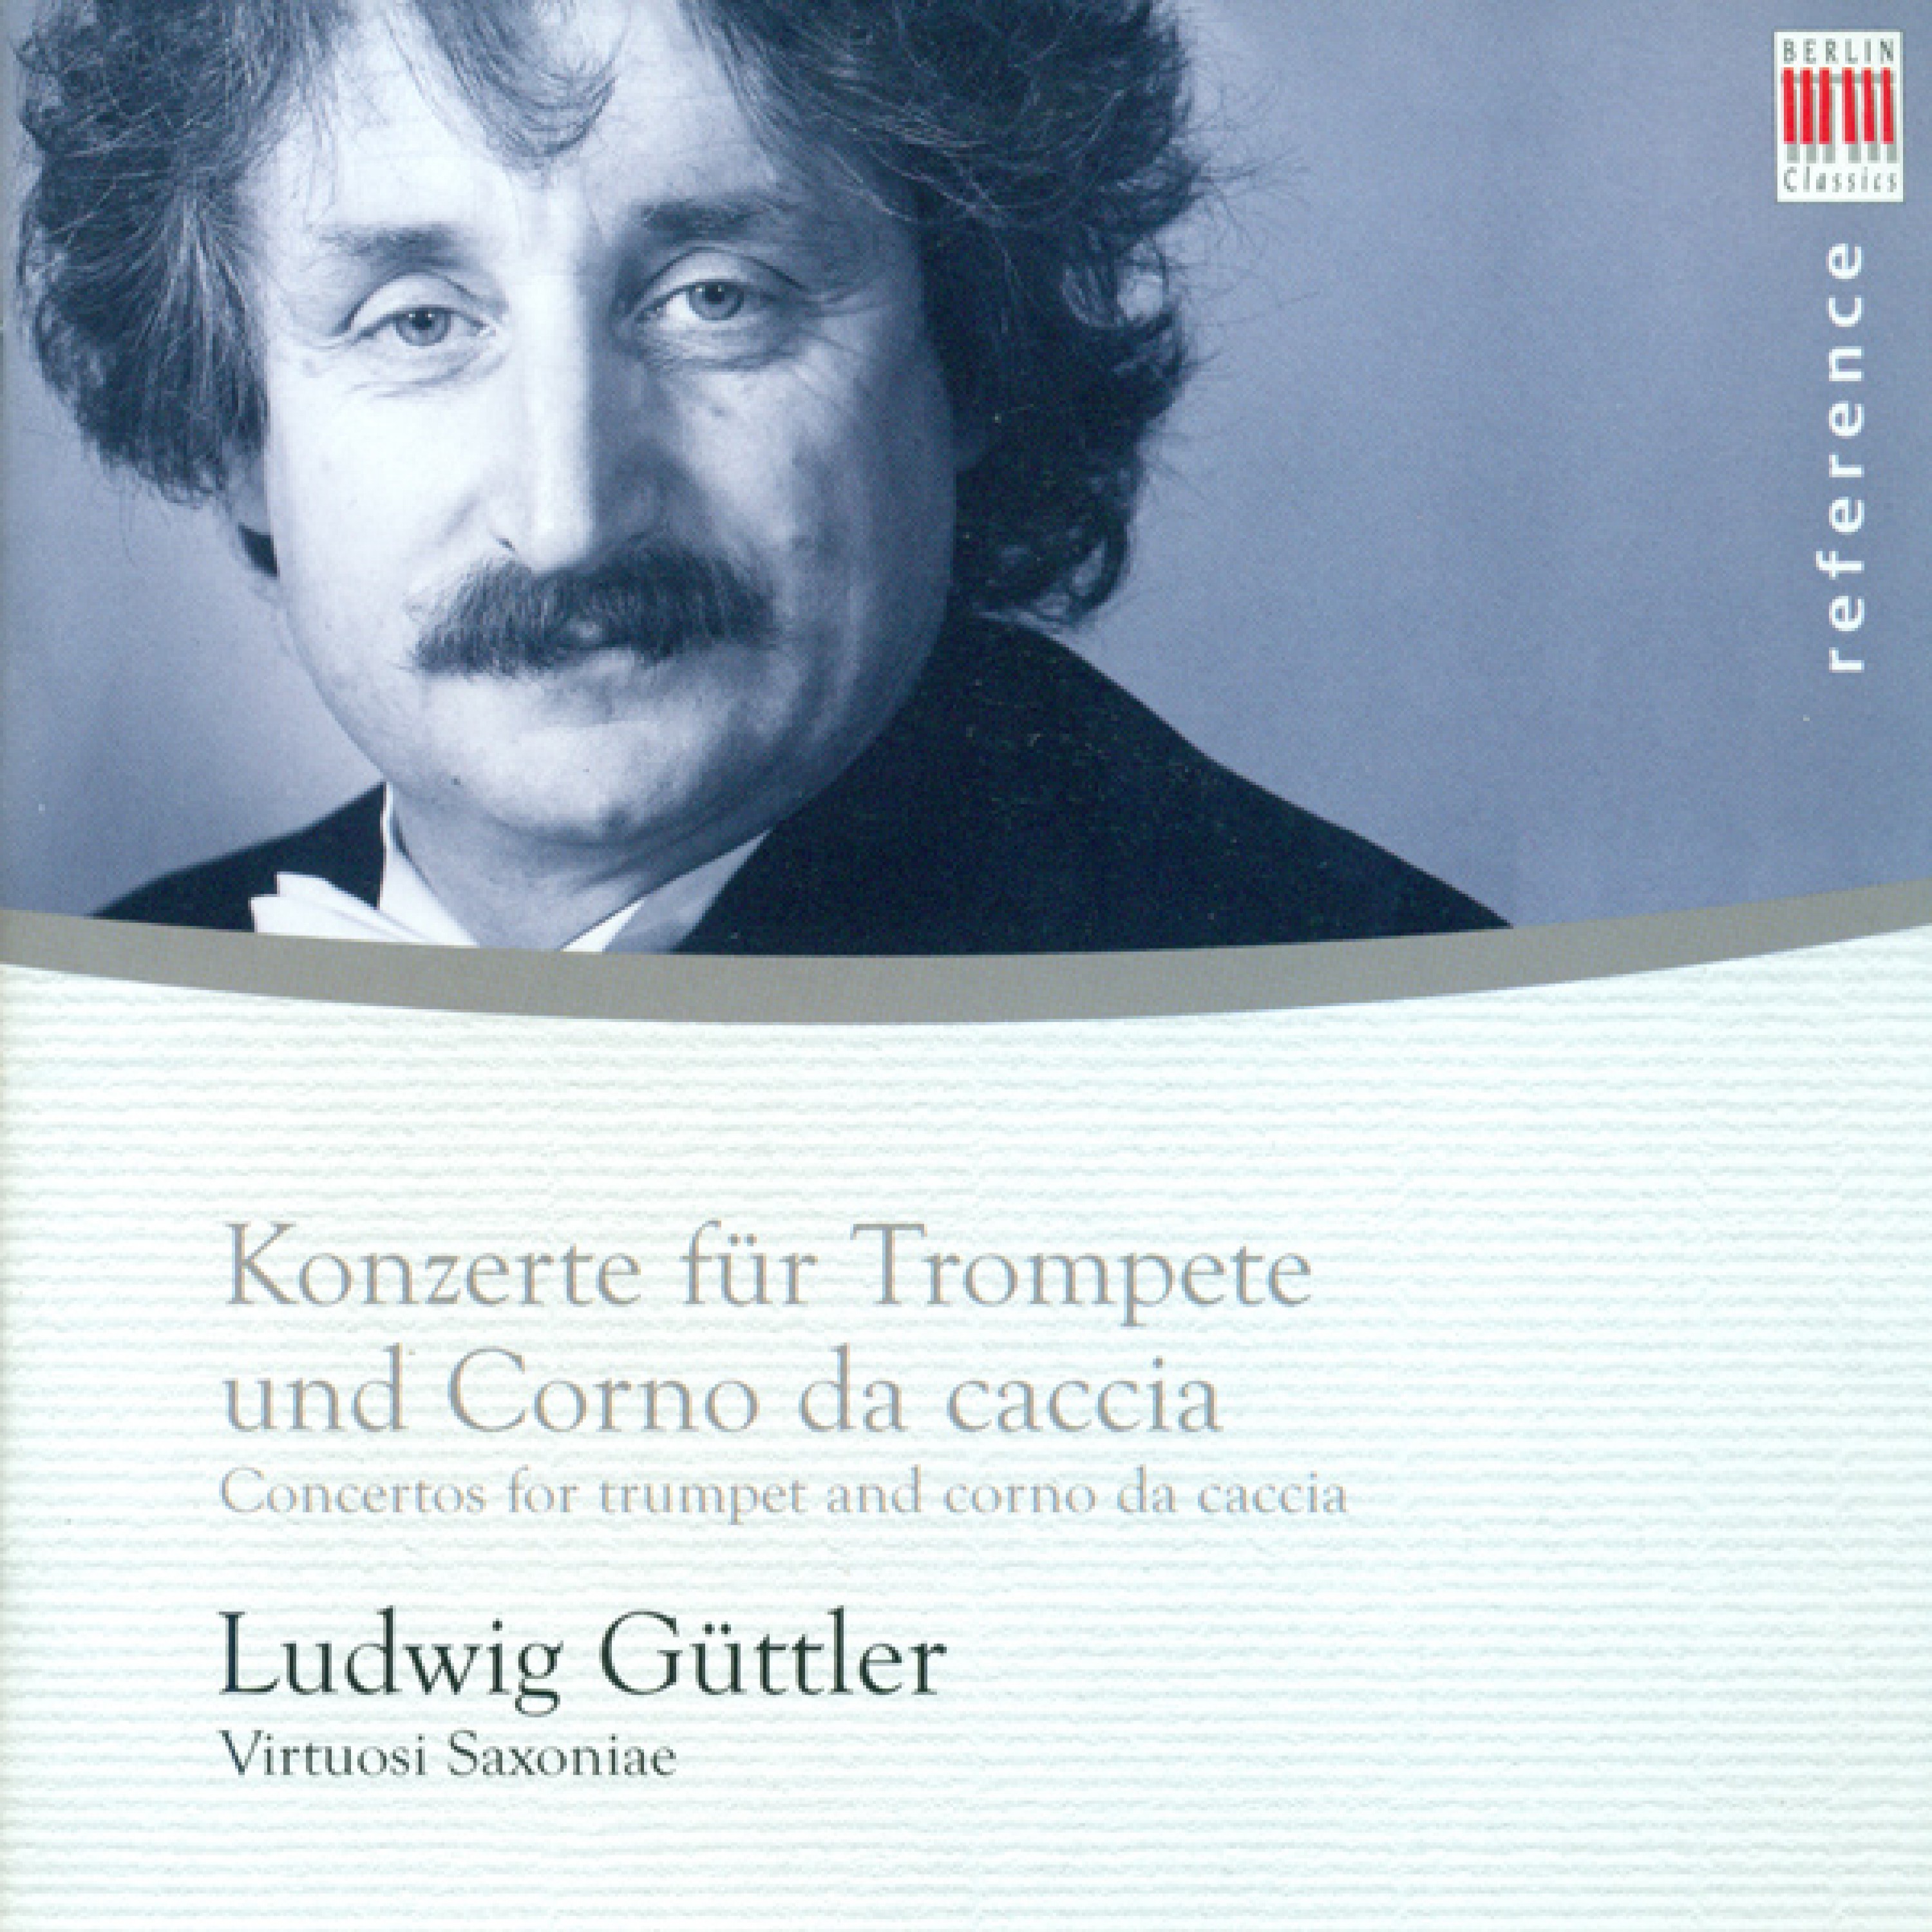 Trumpet and Horn Recital: Guttler, Ludwig  Georg Friedrich H ndel  Johann Melchior Molter  Johann Wilhelm Hertel  Johann Valentin Rathgeber  Johannes Matthias Sperger